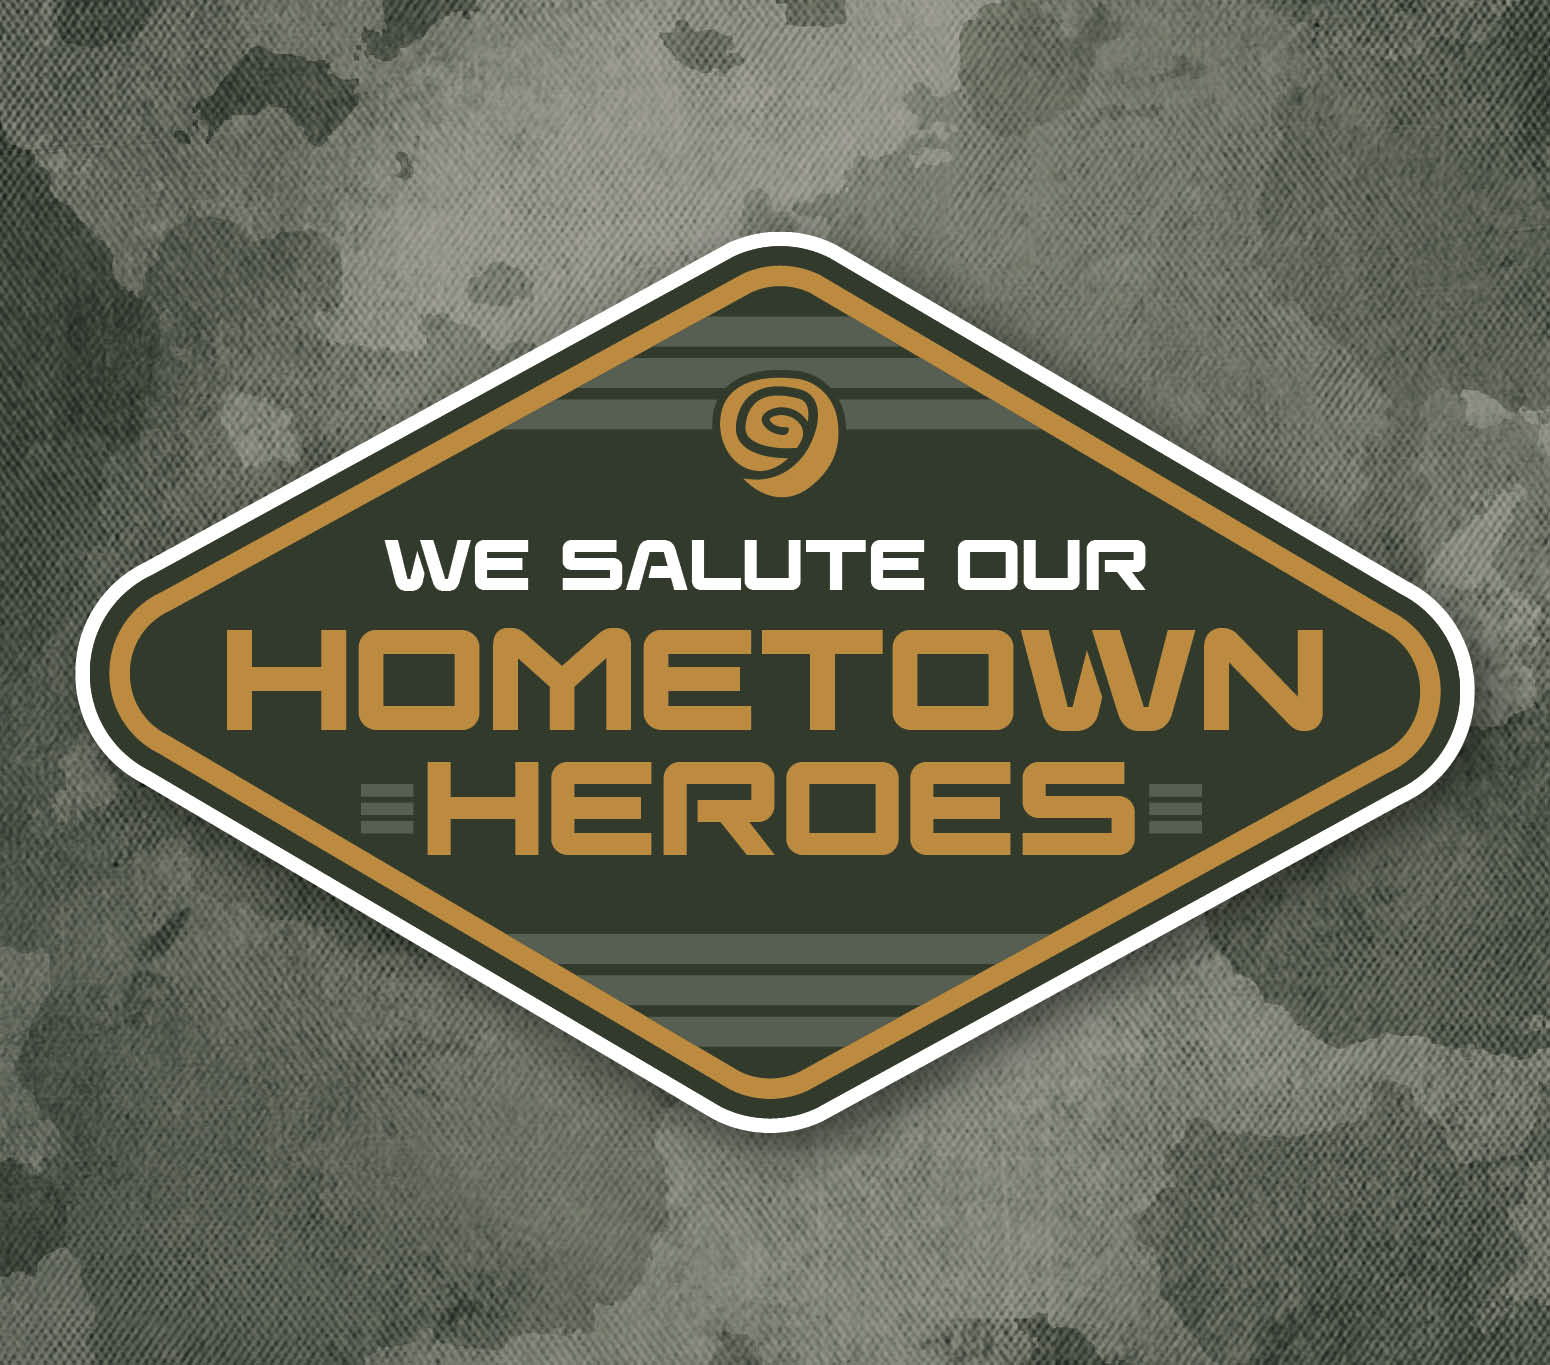 We Salute Our Hometown Heroes